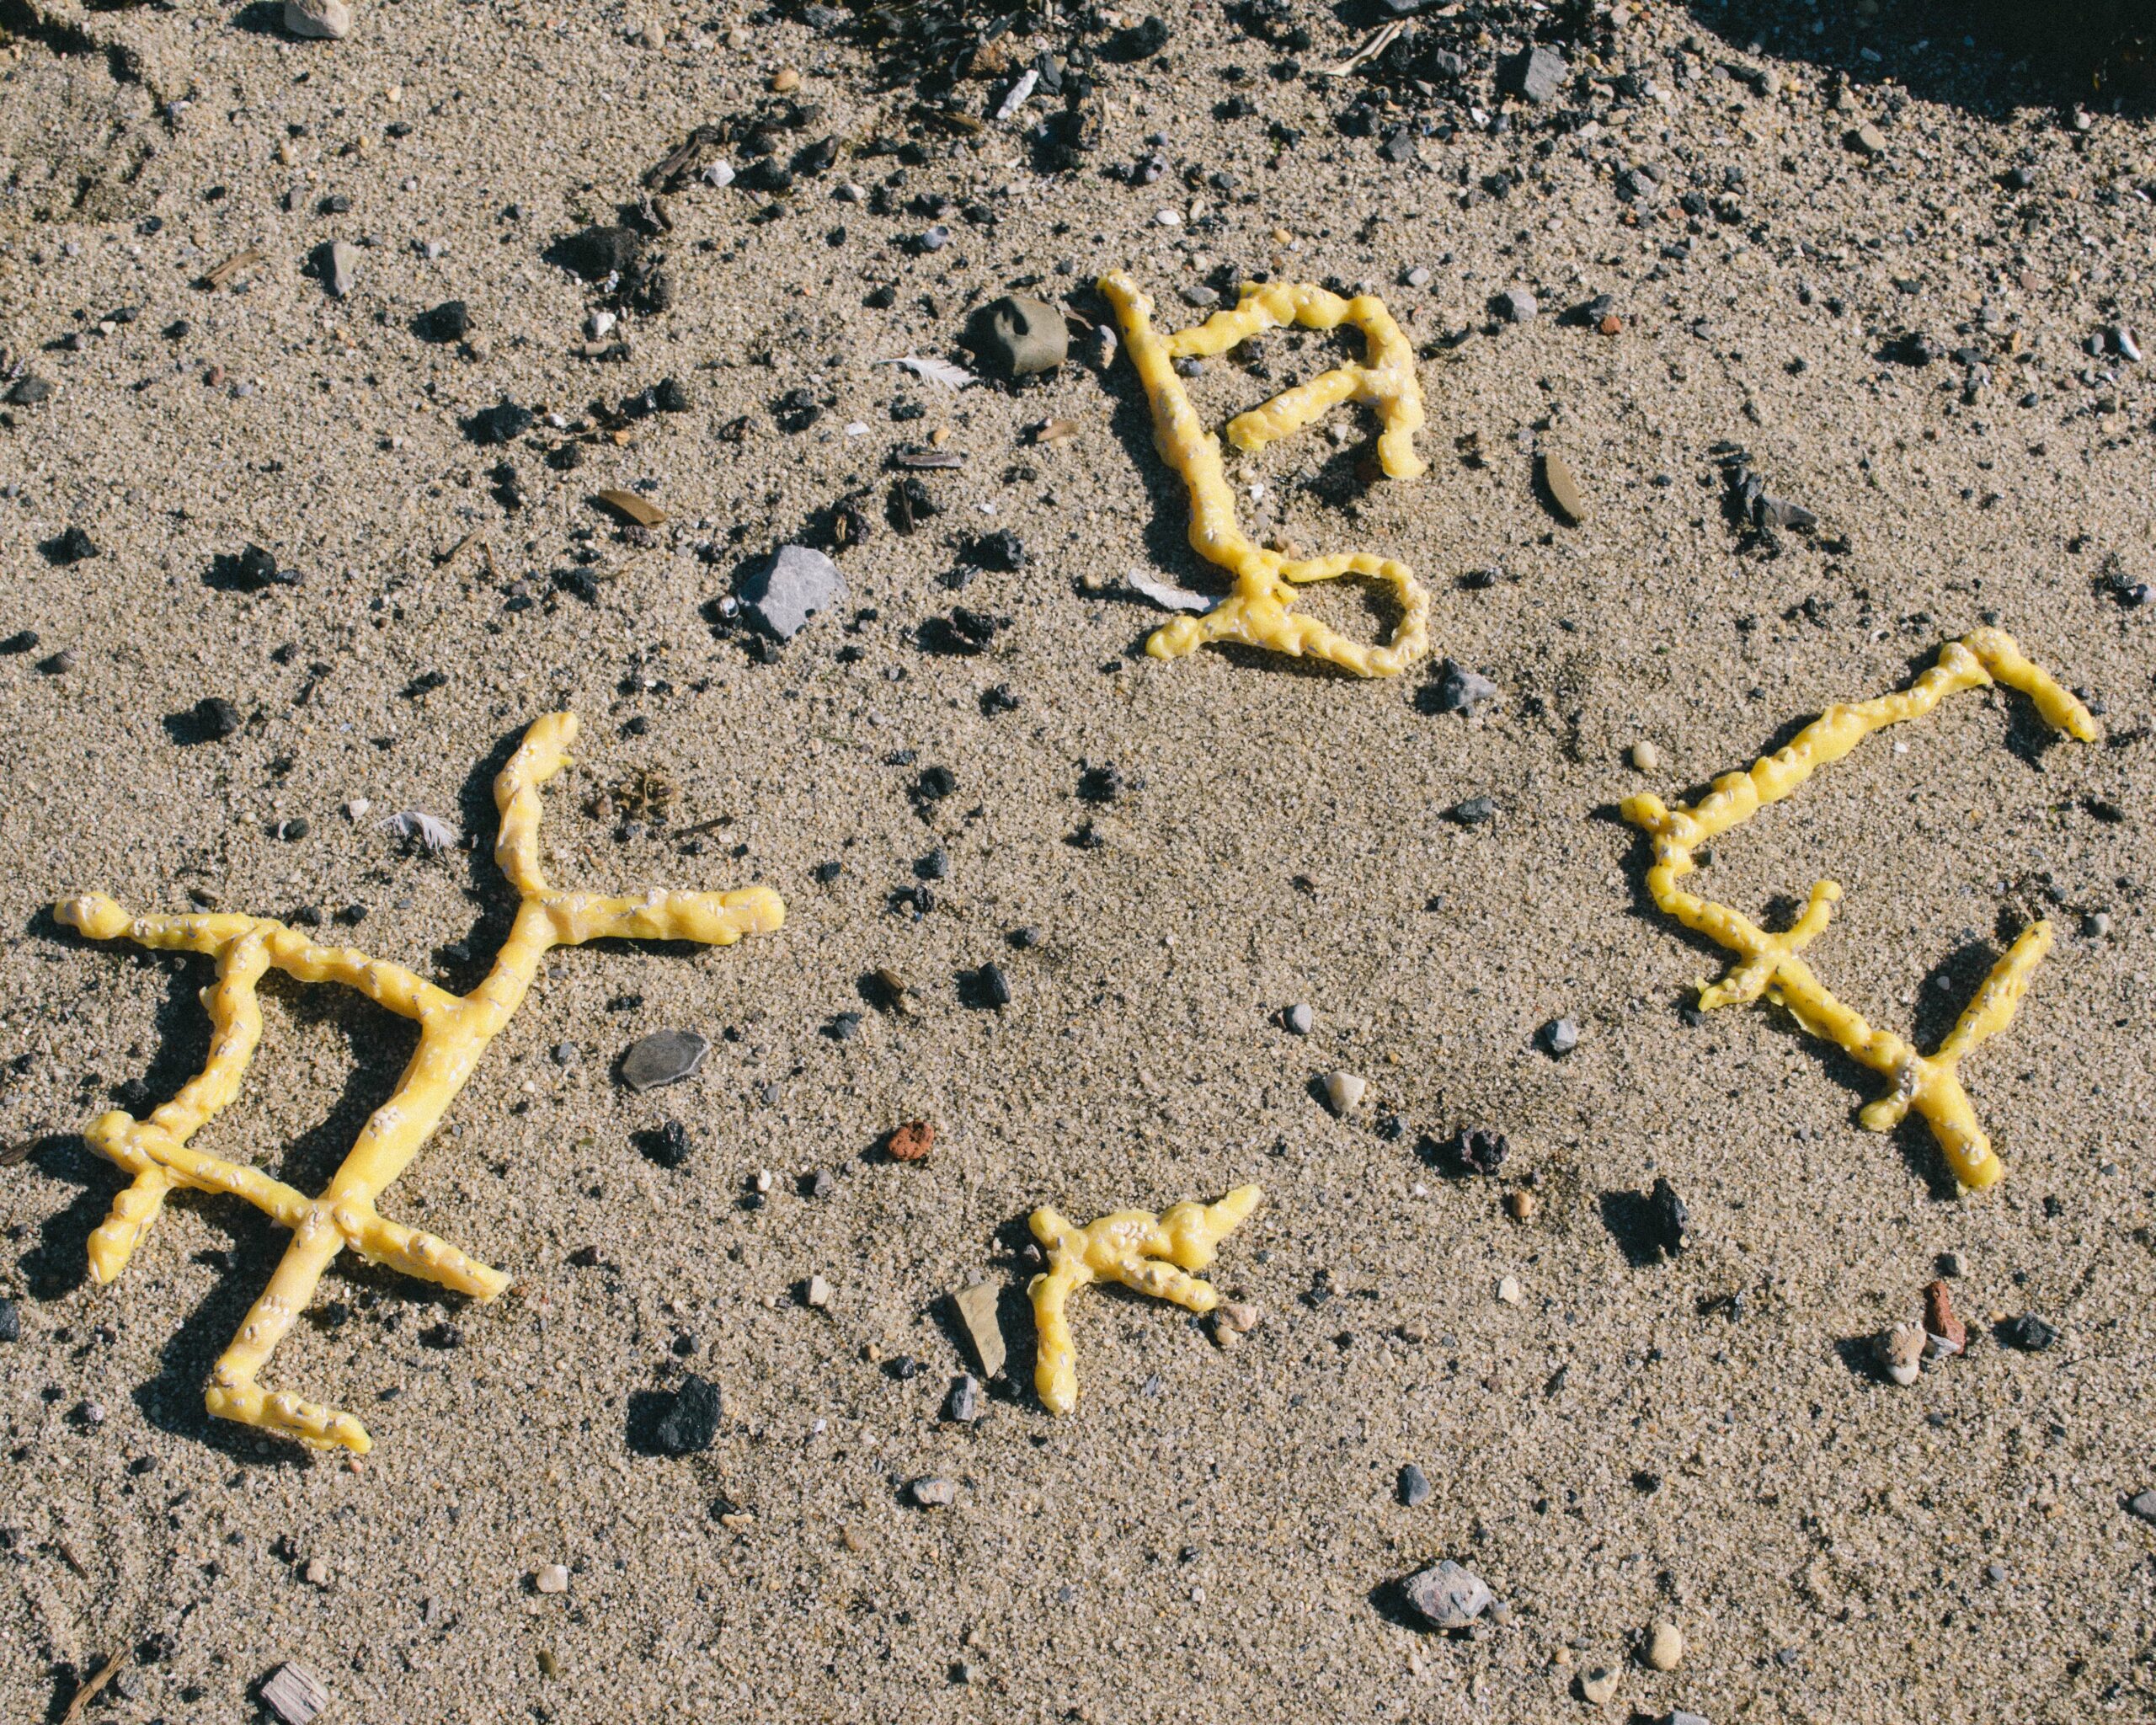 Three angular beeswax figures sit on rock-flecked sand.